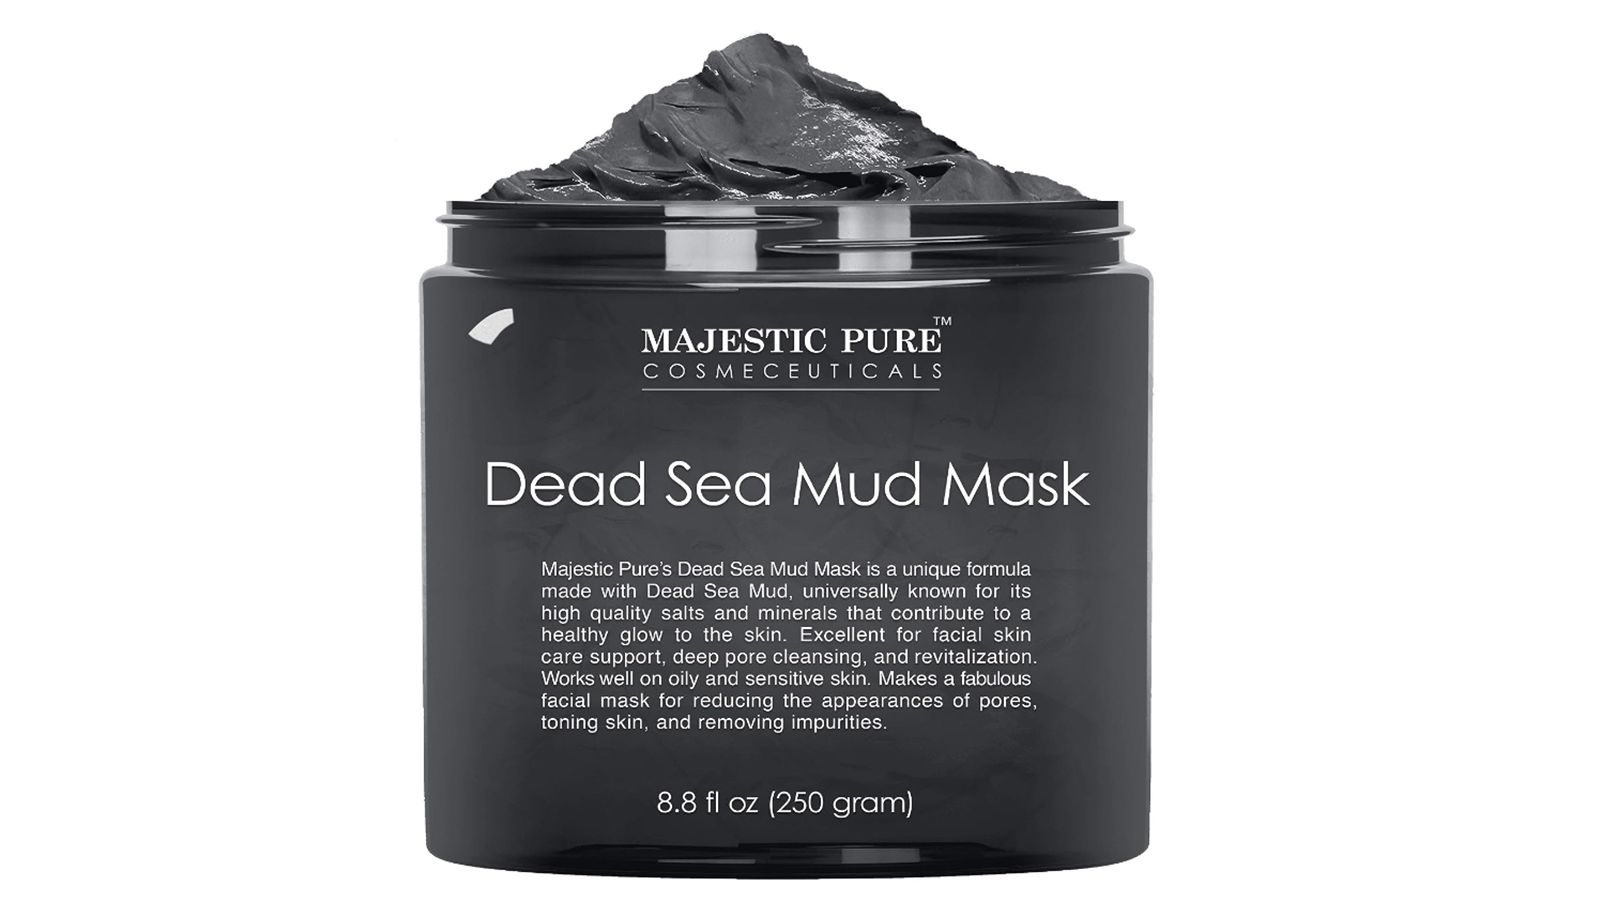 https://media.cnn.com/api/v1/images/stellar/prod/majestic-pure-dead-sea-mud-mask-gifts-2023.jpg?c=original